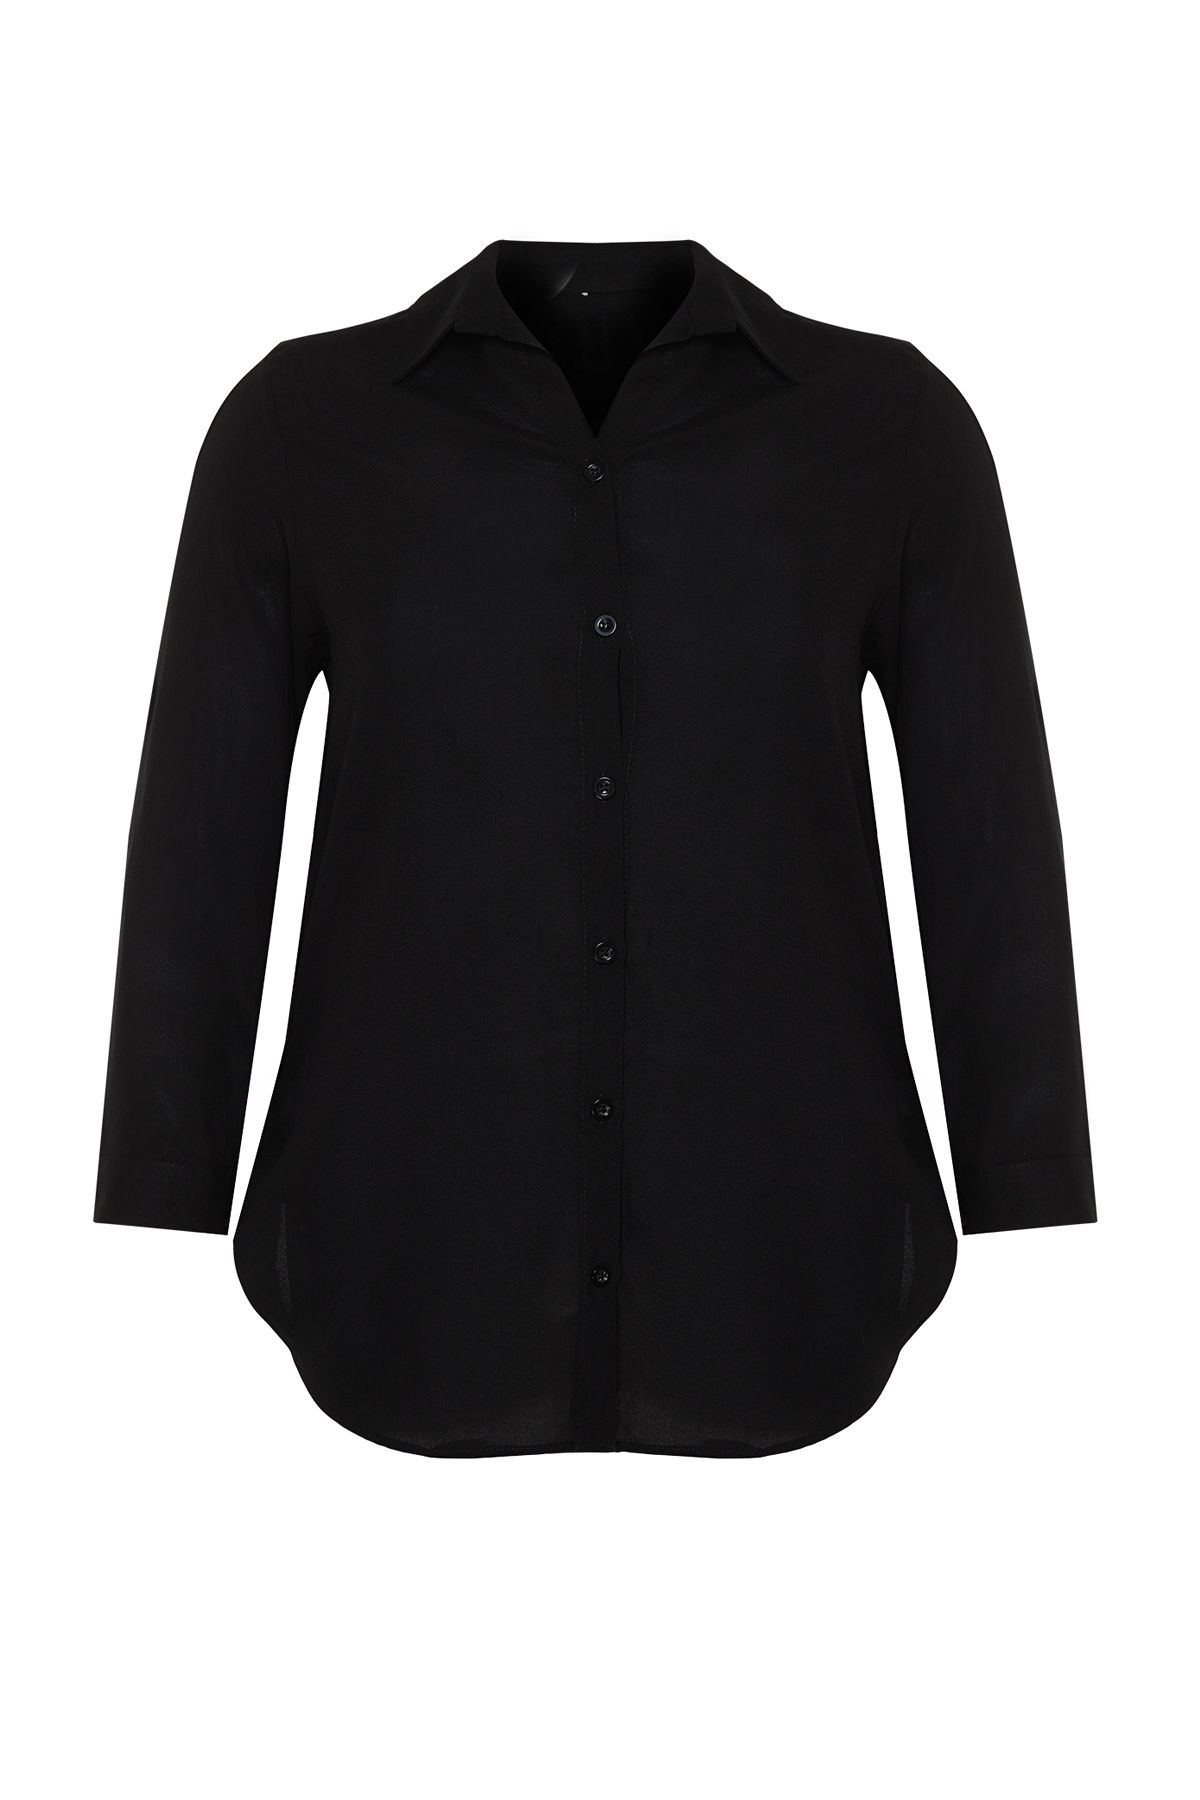 Trendyol Curve Black Shirt